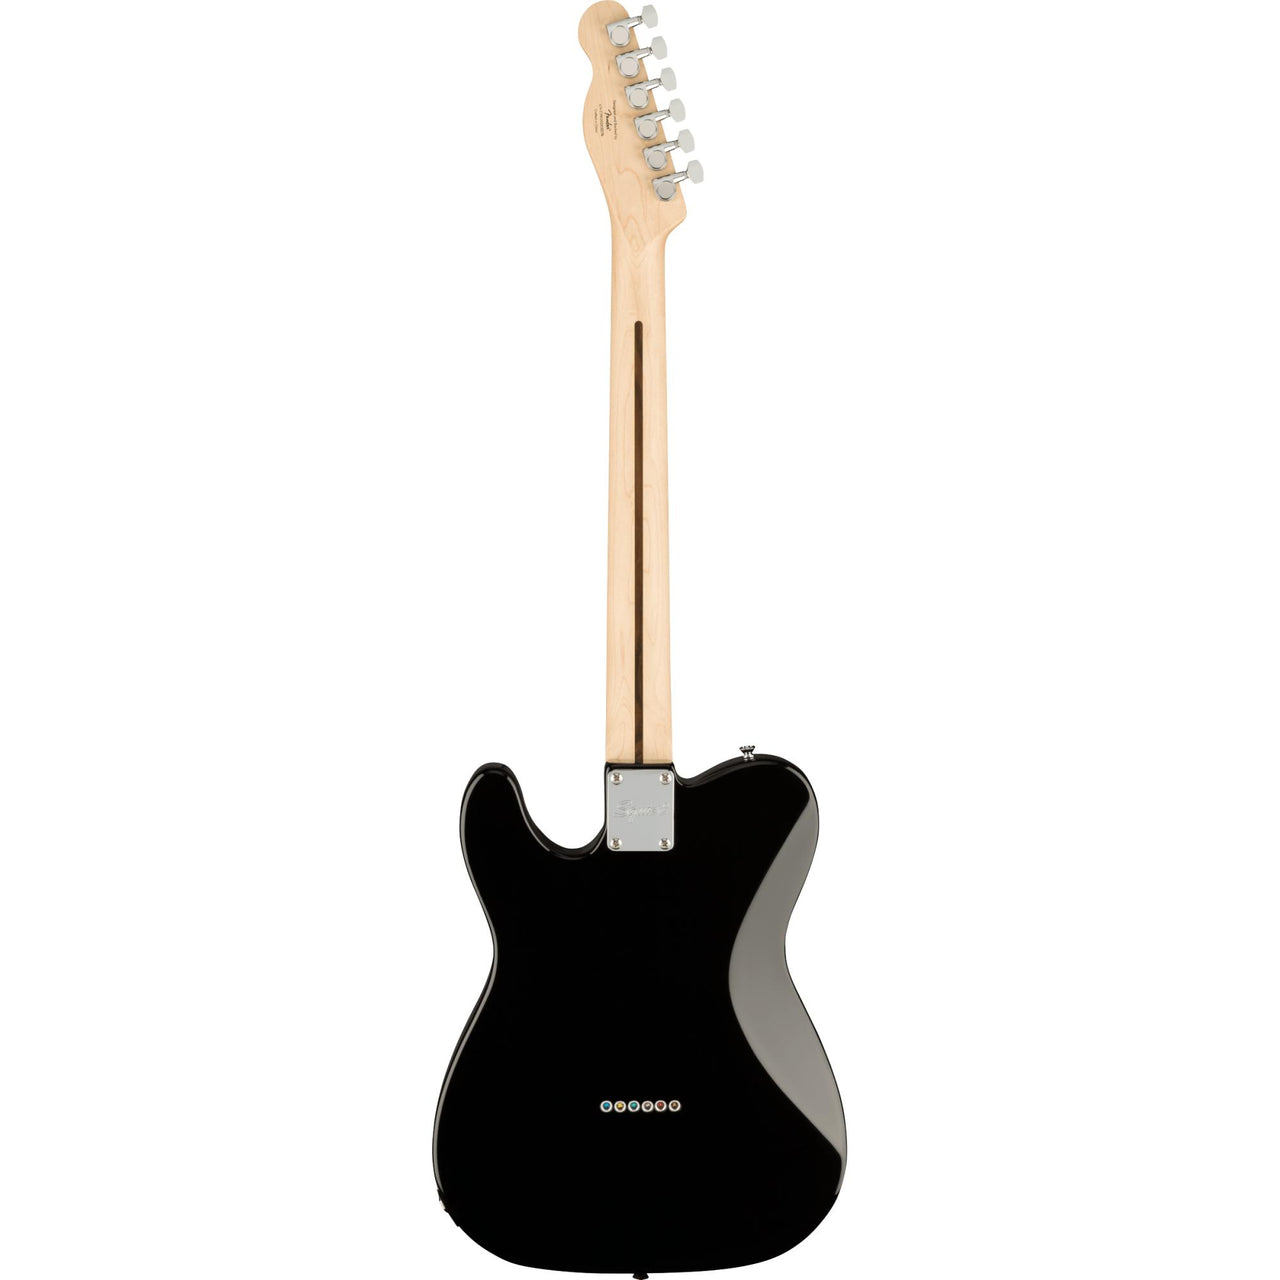 Guitarra Fender Affinity Series Telecaster Deluxe Electrica Squier Black 0378253506